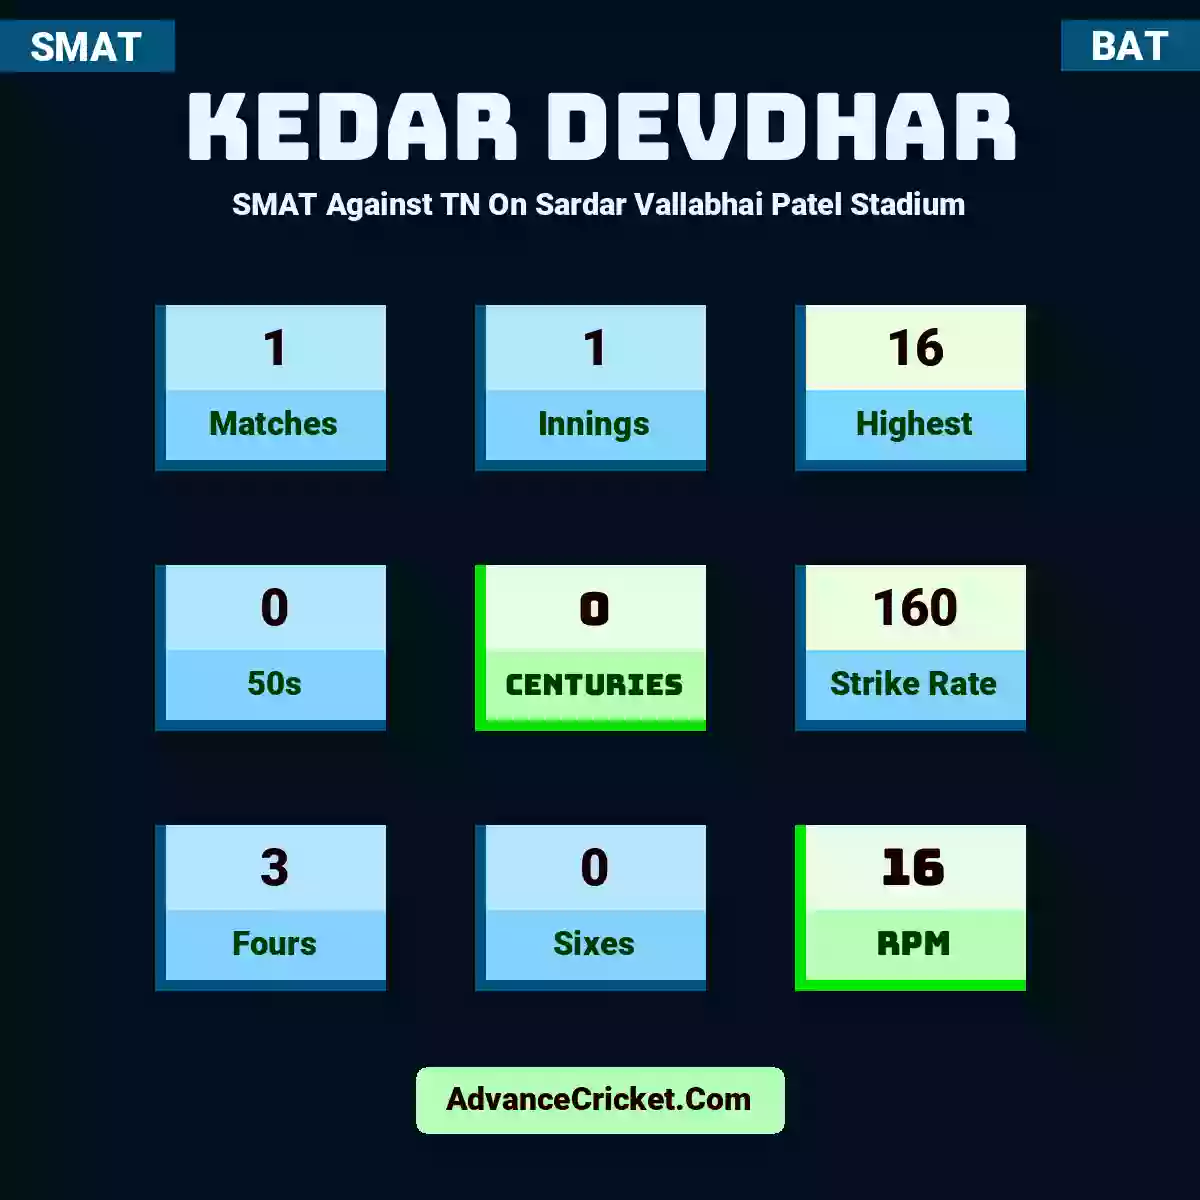 Kedar Devdhar SMAT  Against TN On Sardar Vallabhai Patel Stadium, Kedar Devdhar played 1 matches, scored 16 runs as highest, 0 half-centuries, and 0 centuries, with a strike rate of 160. K.Devdhar hit 3 fours and 0 sixes, with an RPM of 16.